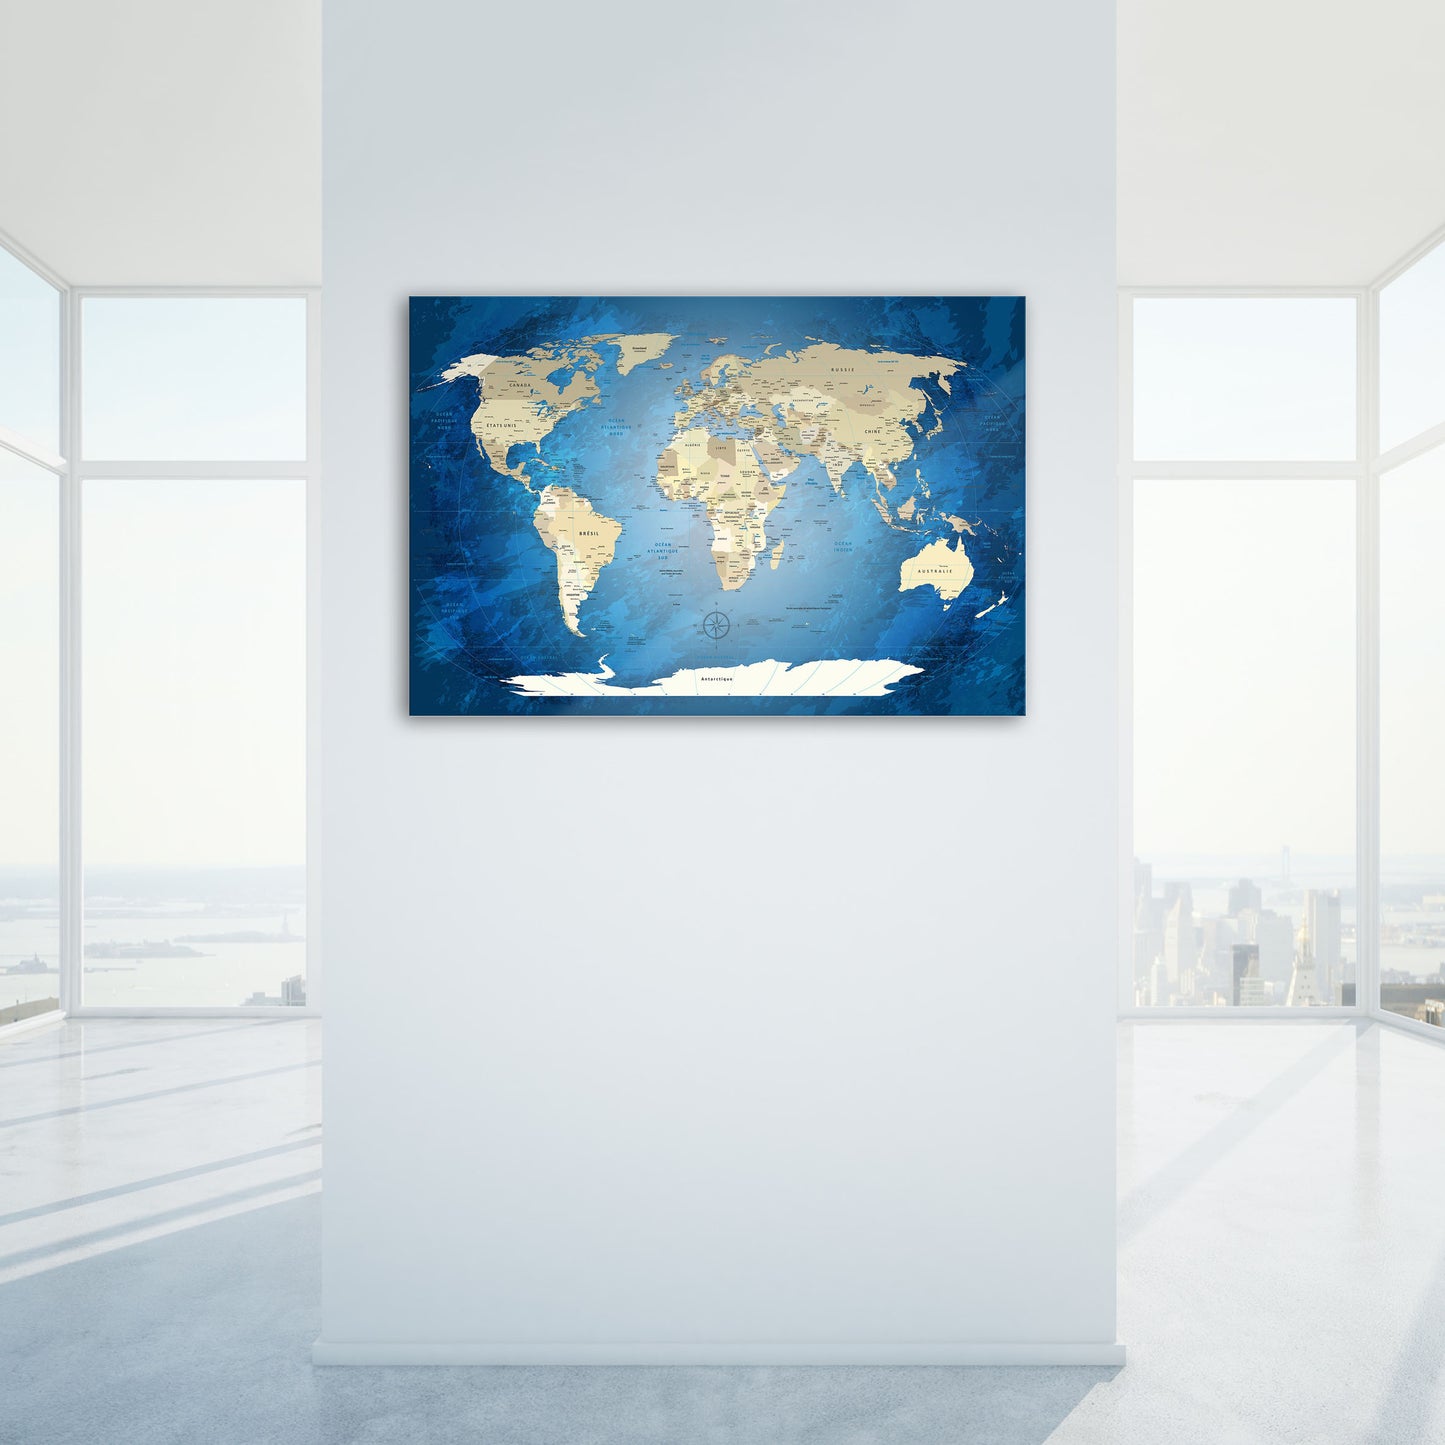 Echtglas Wandbild - Weltkarte Blue Ocean - WELTKARTEN24